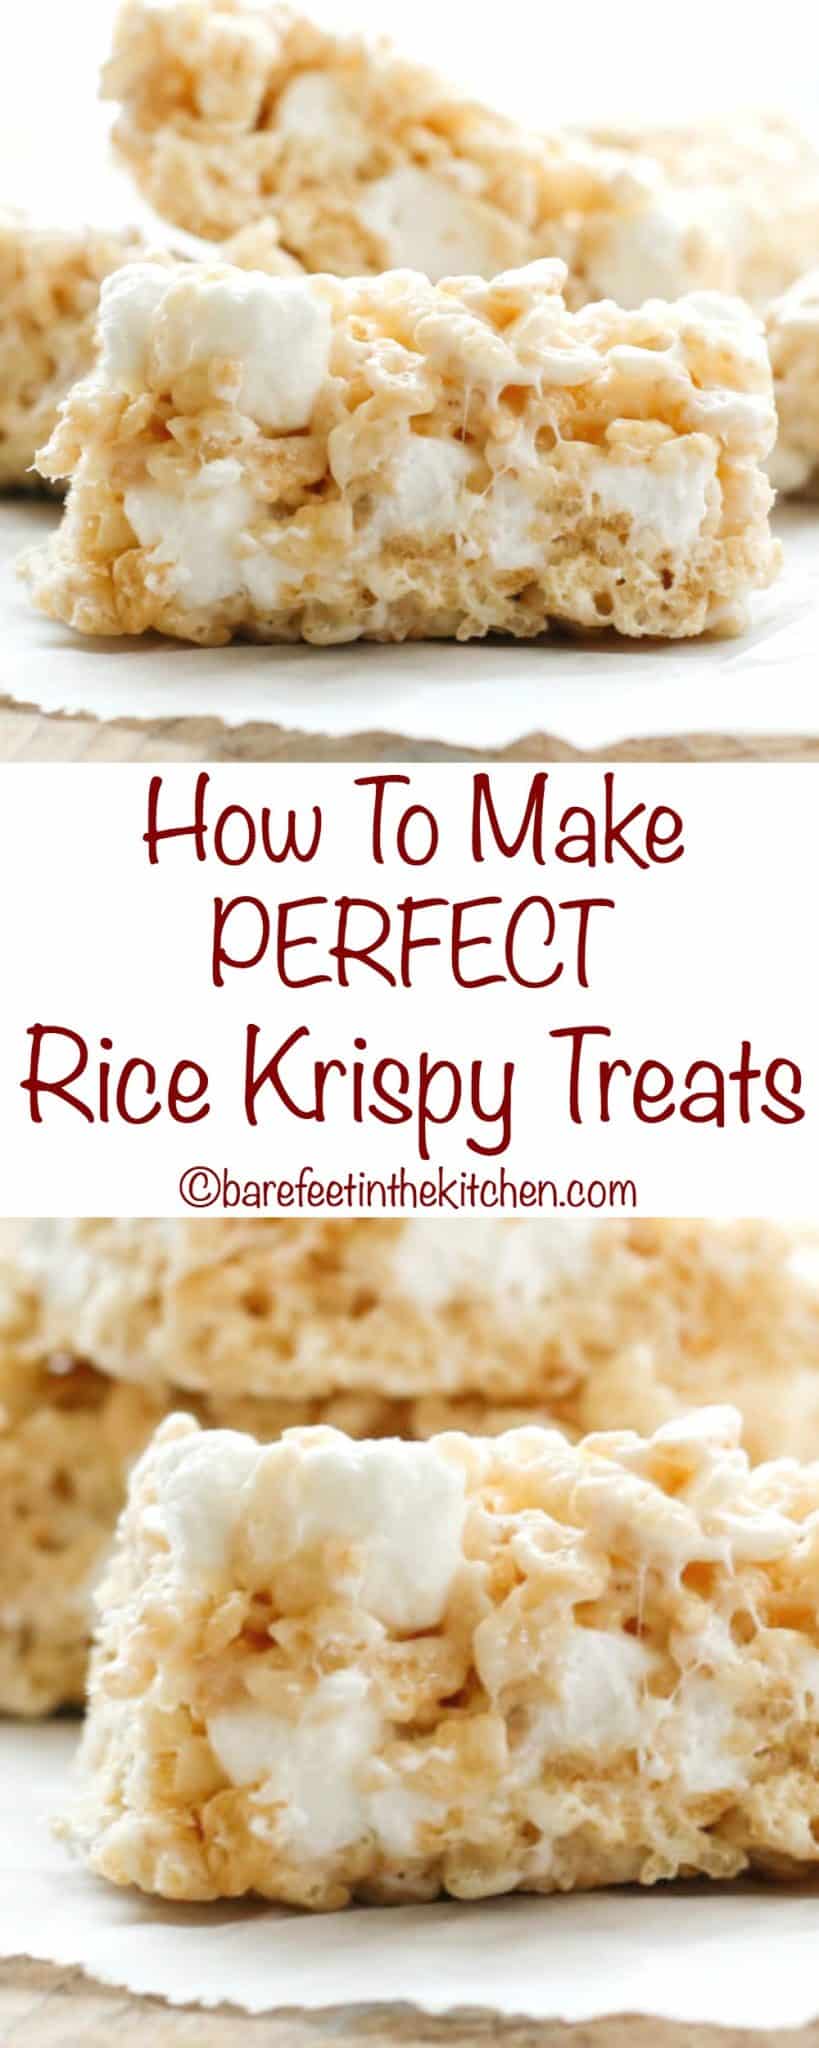 How To Make PERFECT Rice Krispy Treats - get the recipe at barefeetinthekitchen.com